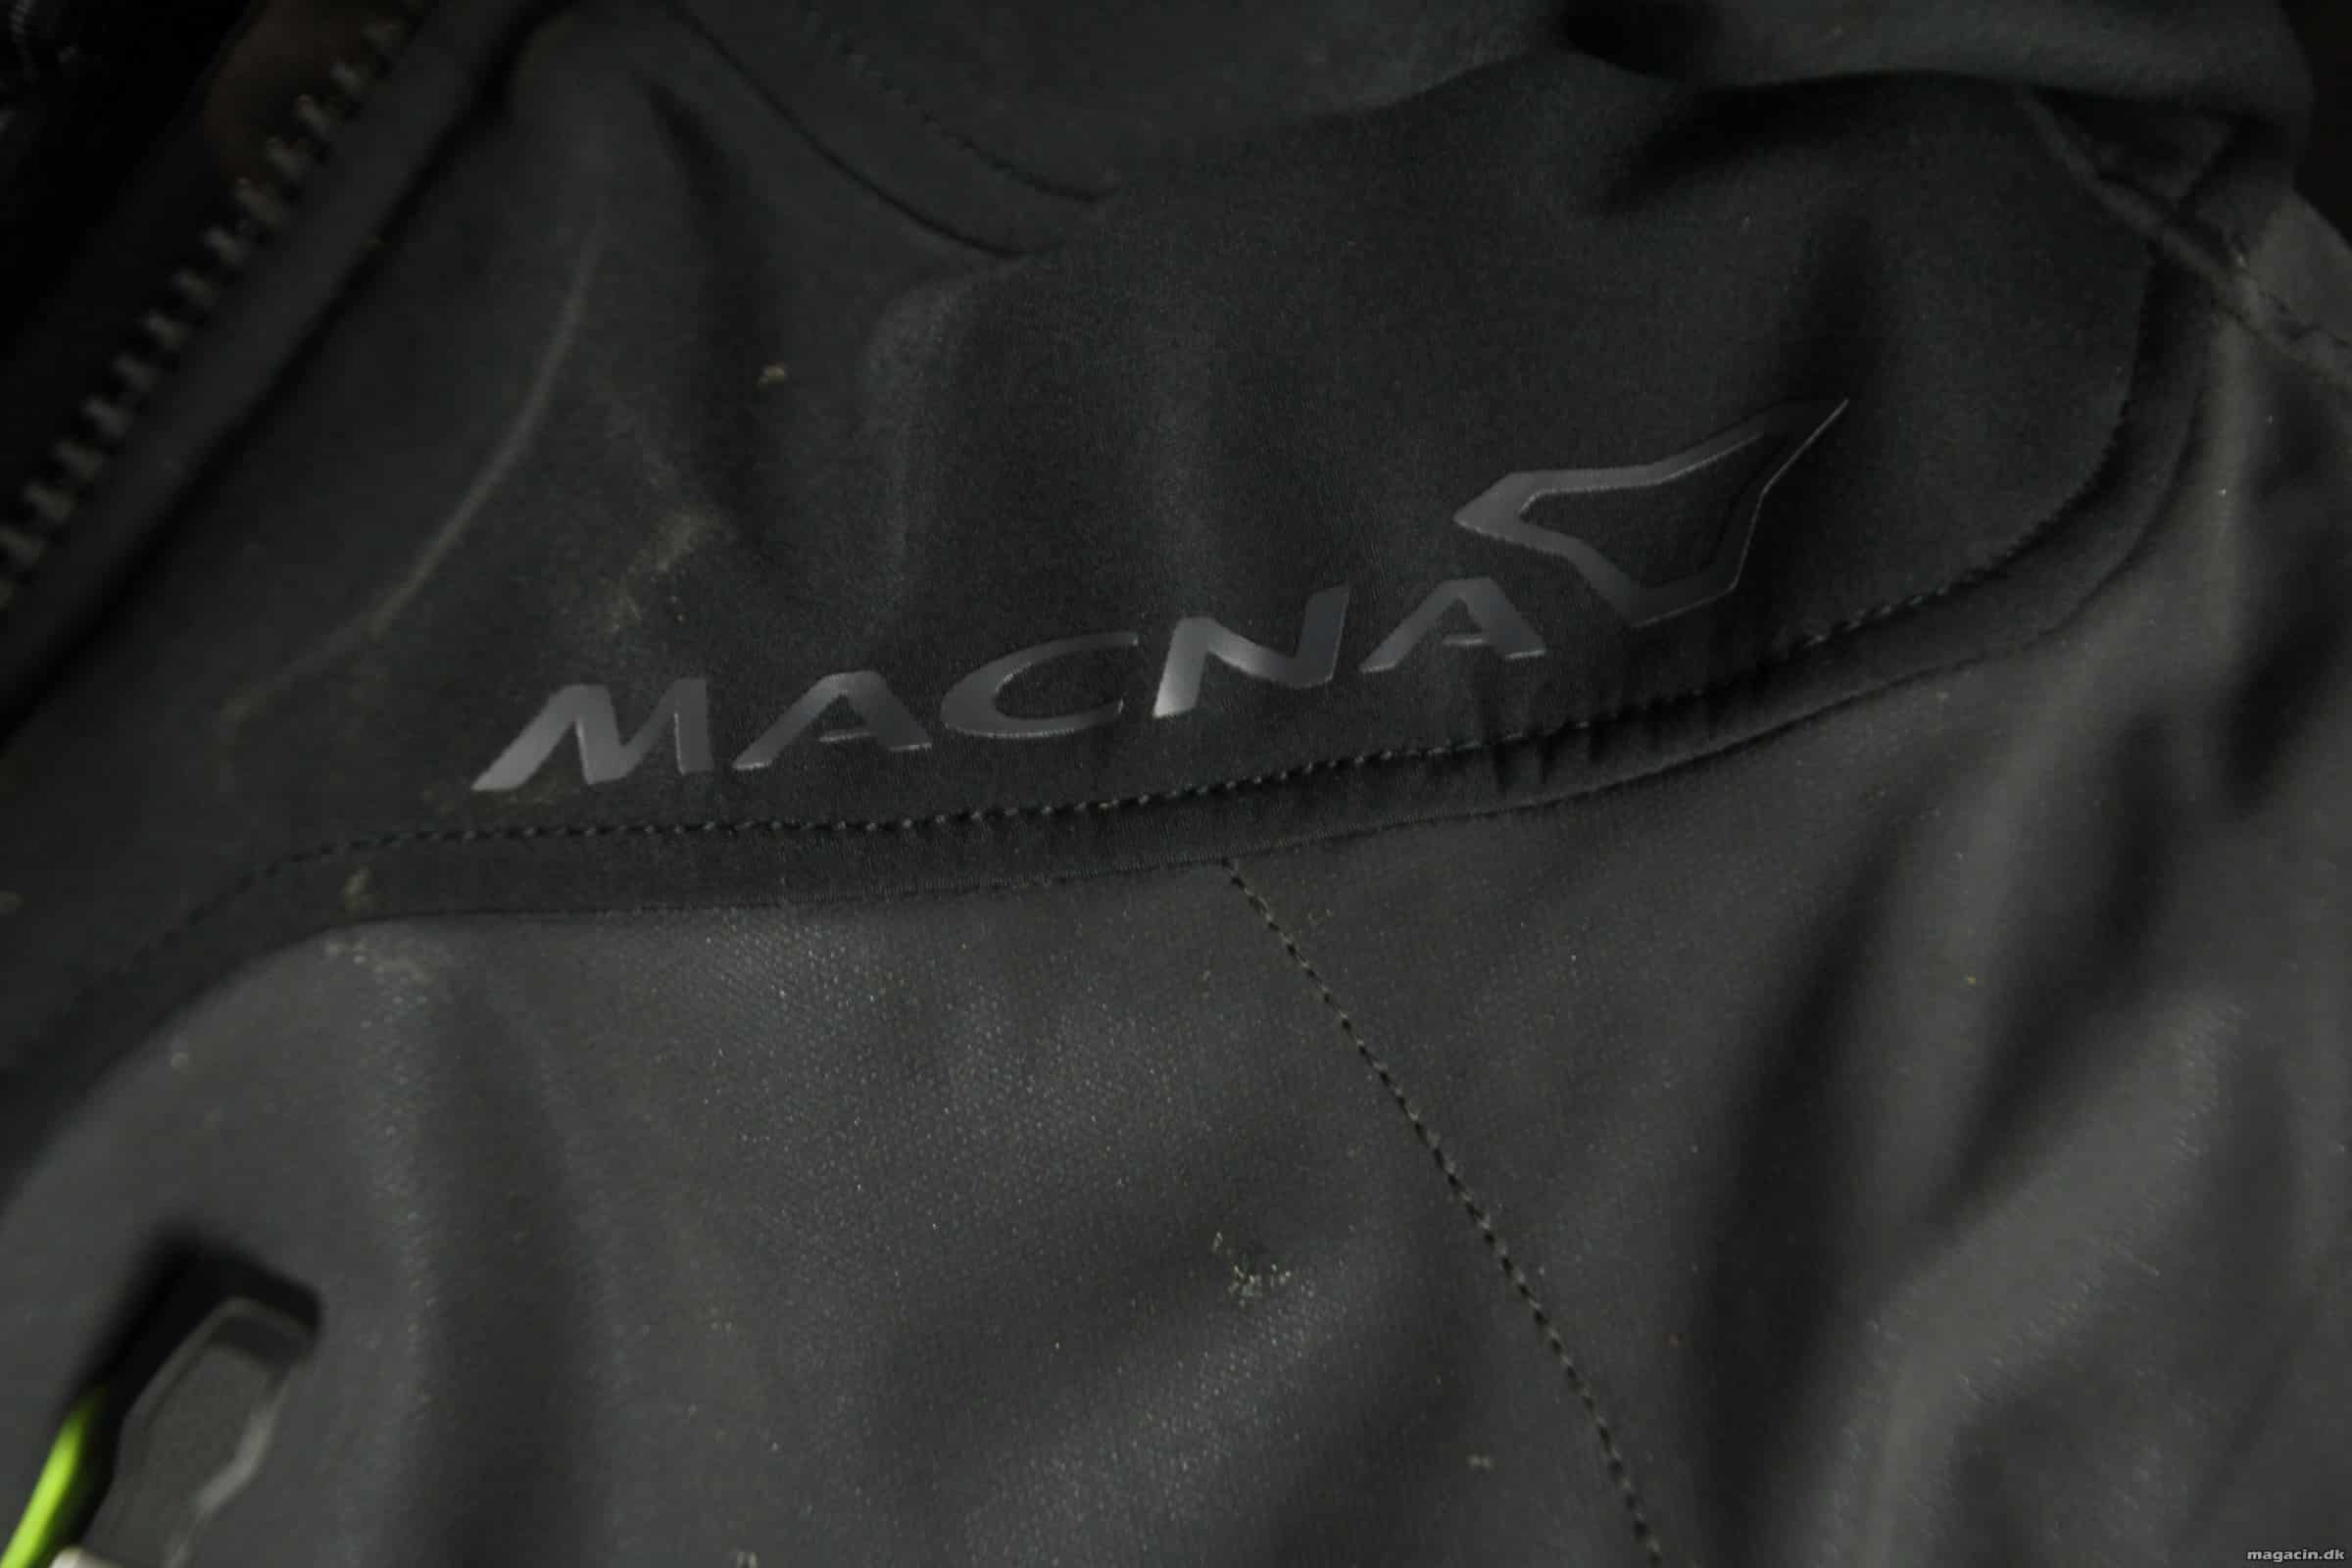 Test: Smart jakke med lækre detaljer